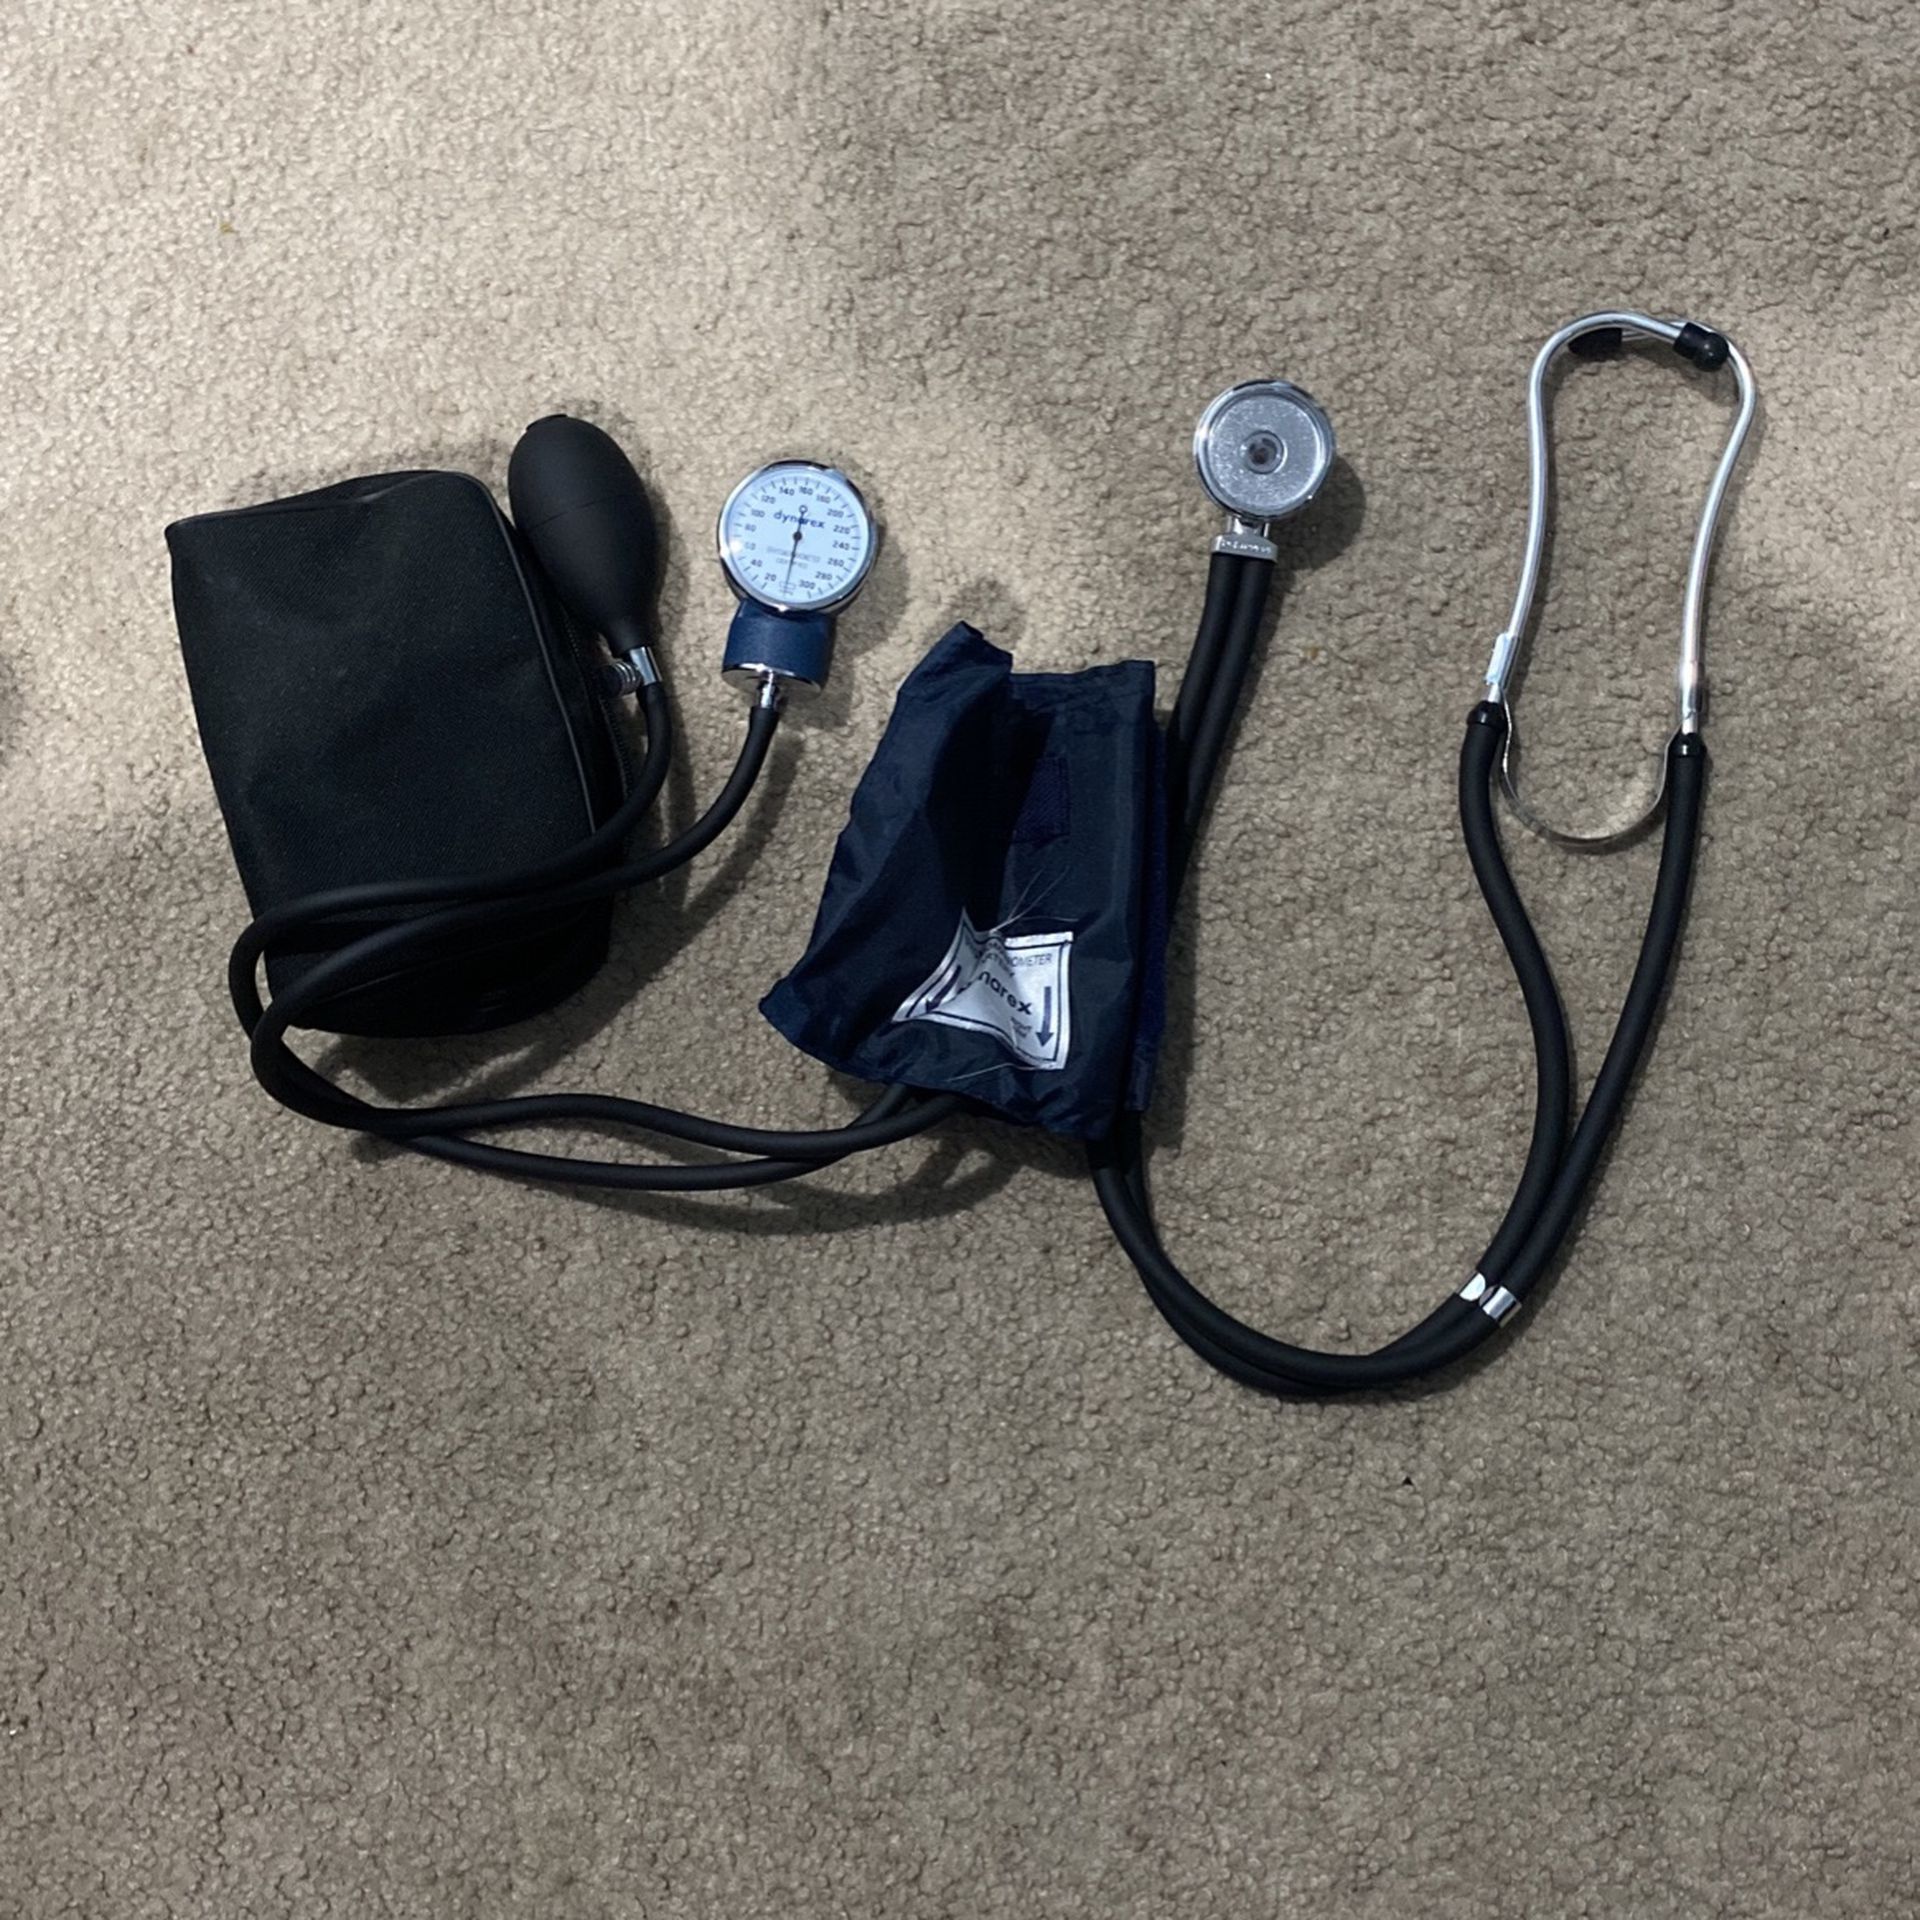 Stethoscope + Blood Pressure Cuff Shygnomanometer